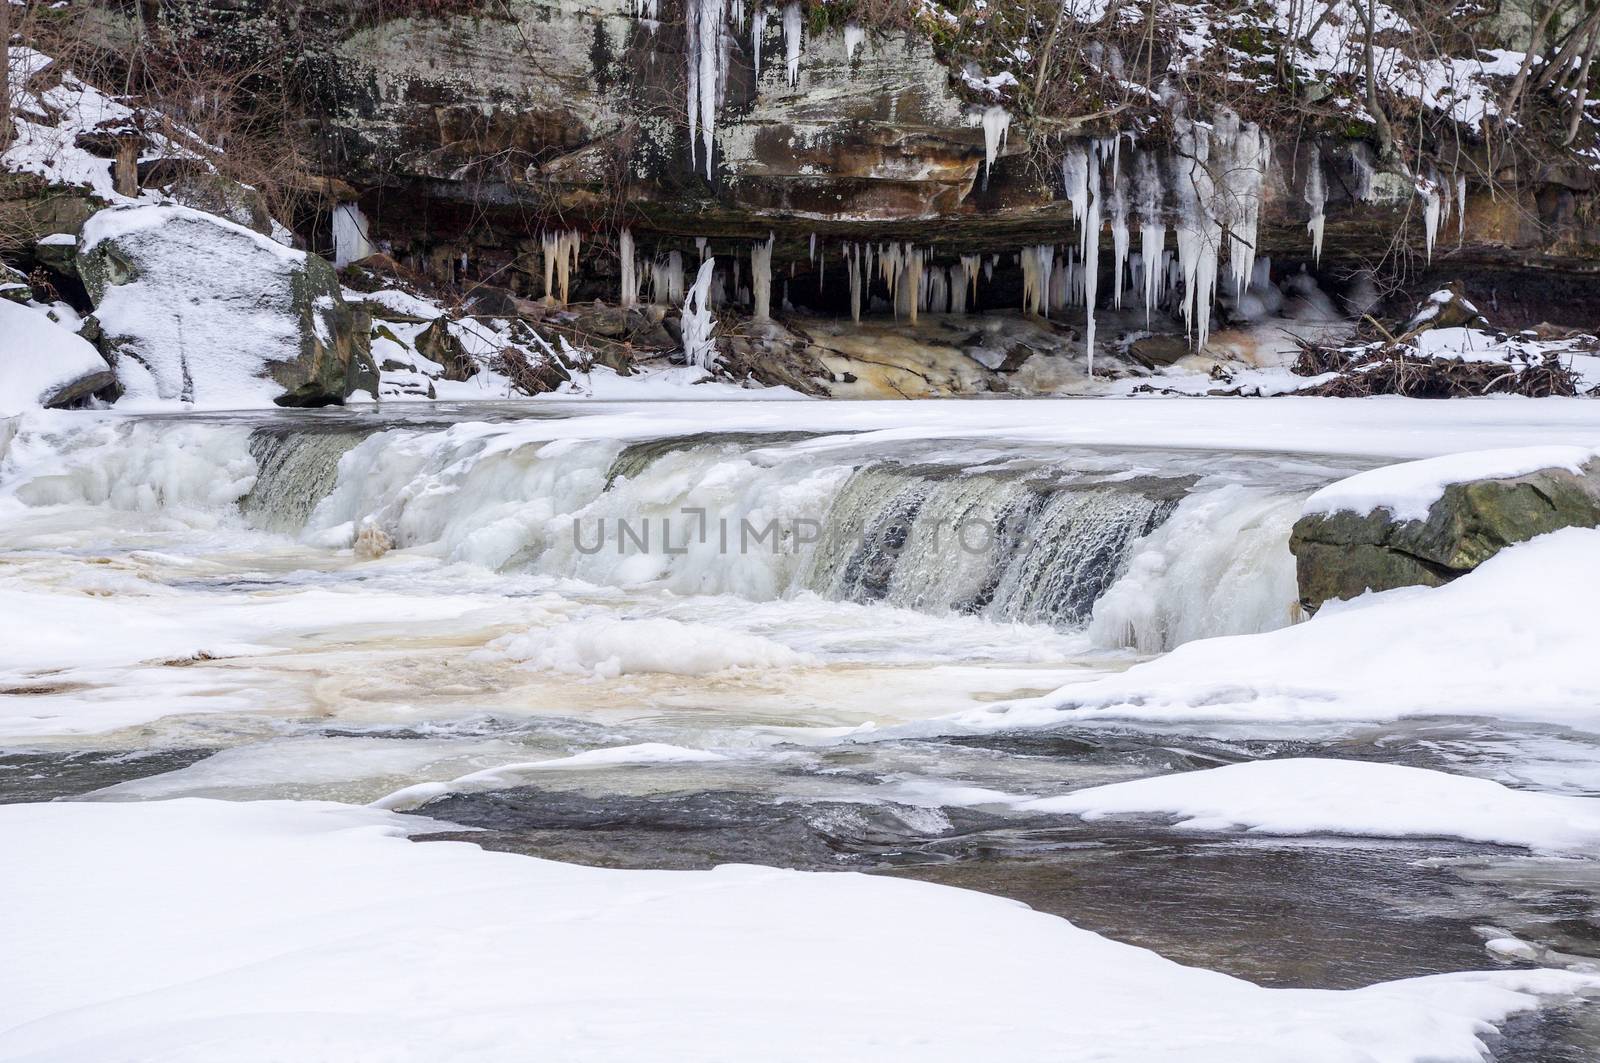 Icy Waterfall in snowy, wintry landscape